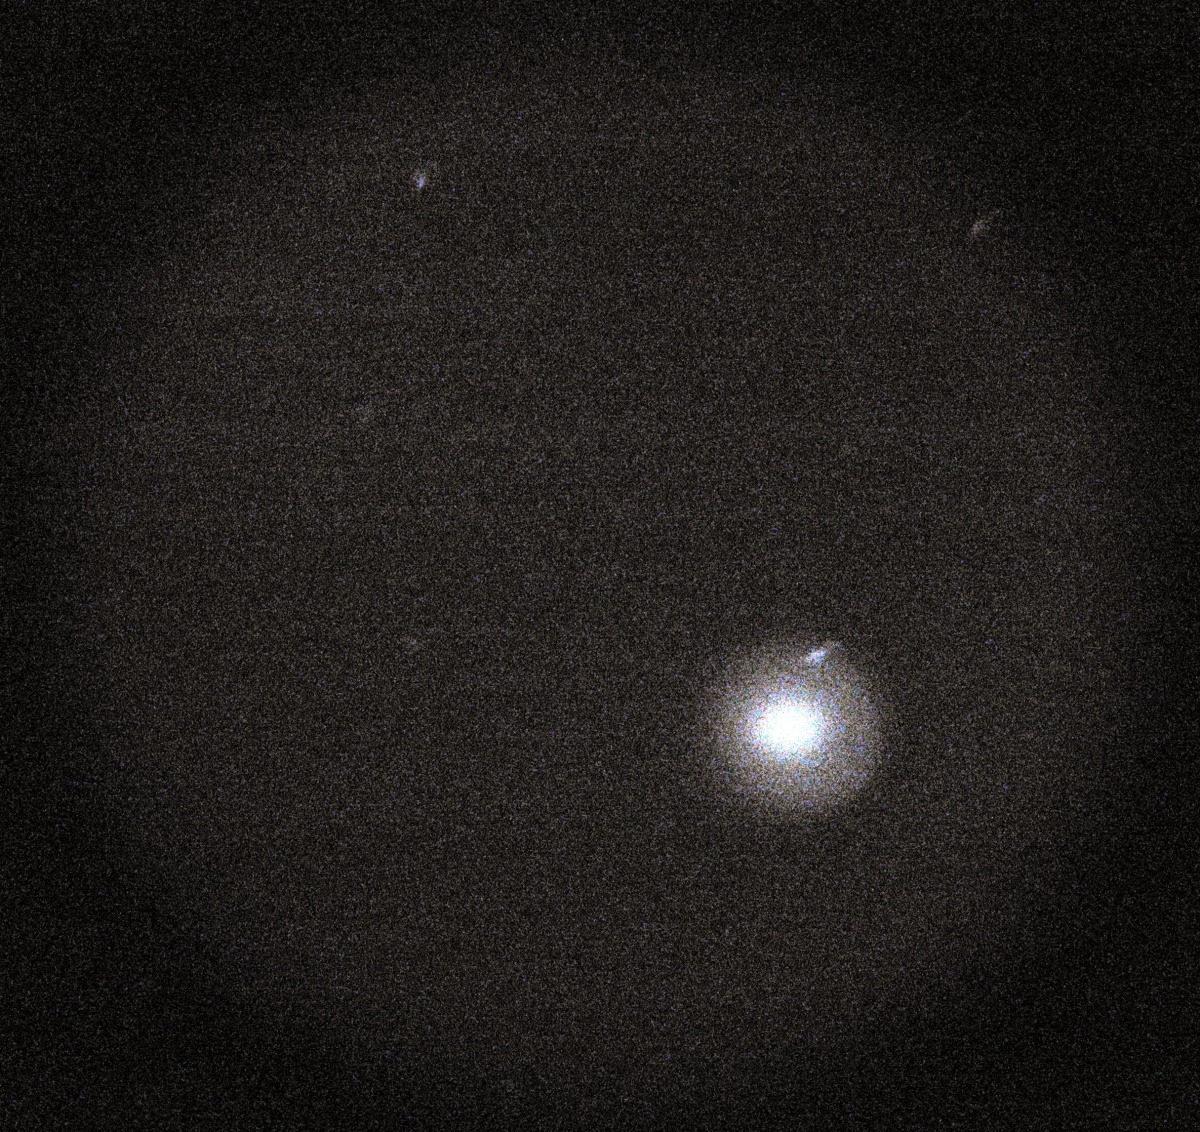 Comet Holmes through telescope